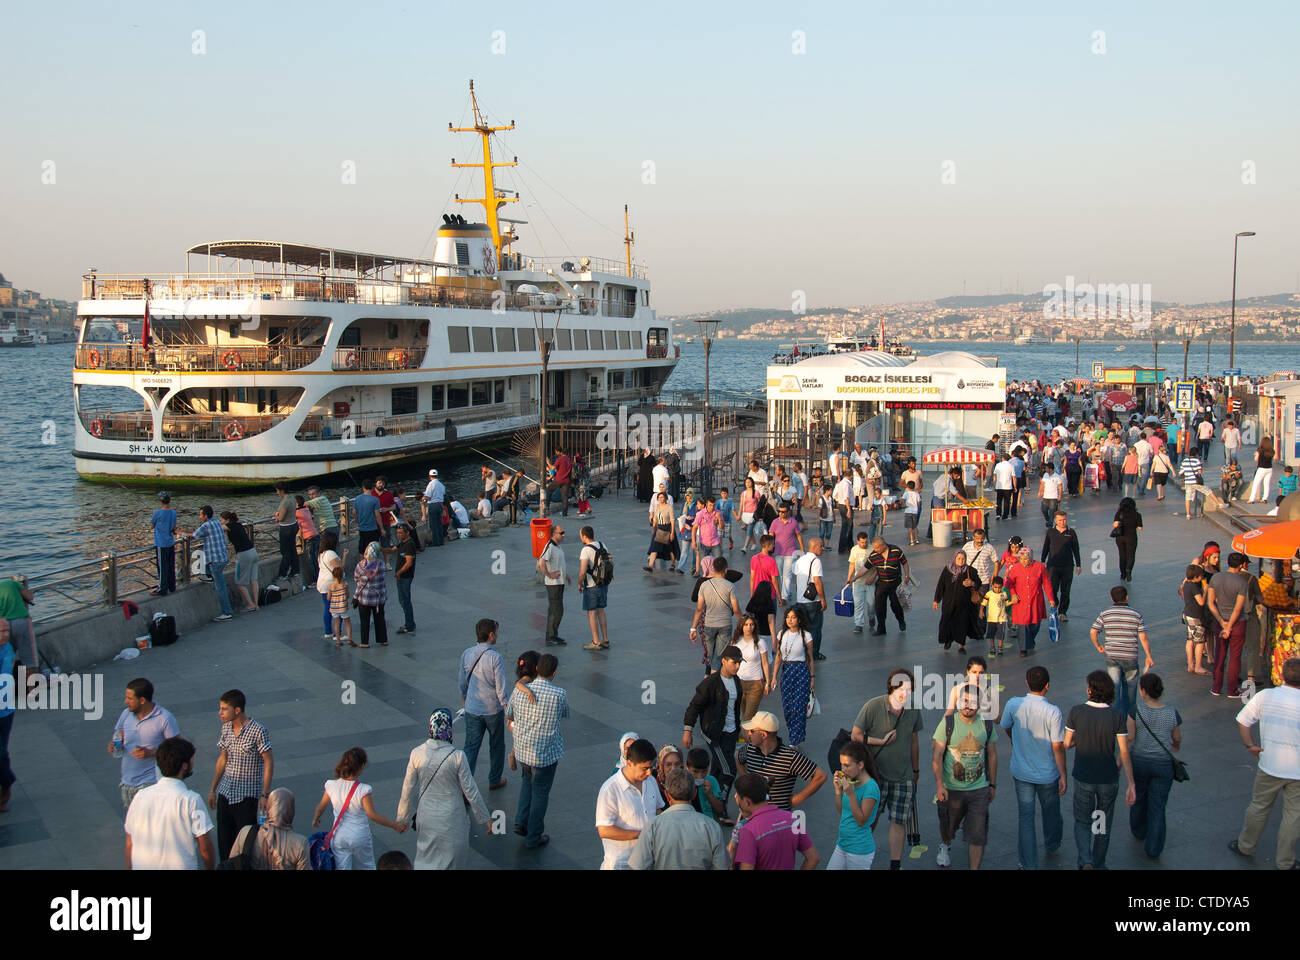 ISTANBUL, TURKEY. The Eminonu waterfront on the Golden Horn. 2012. Stock Photo